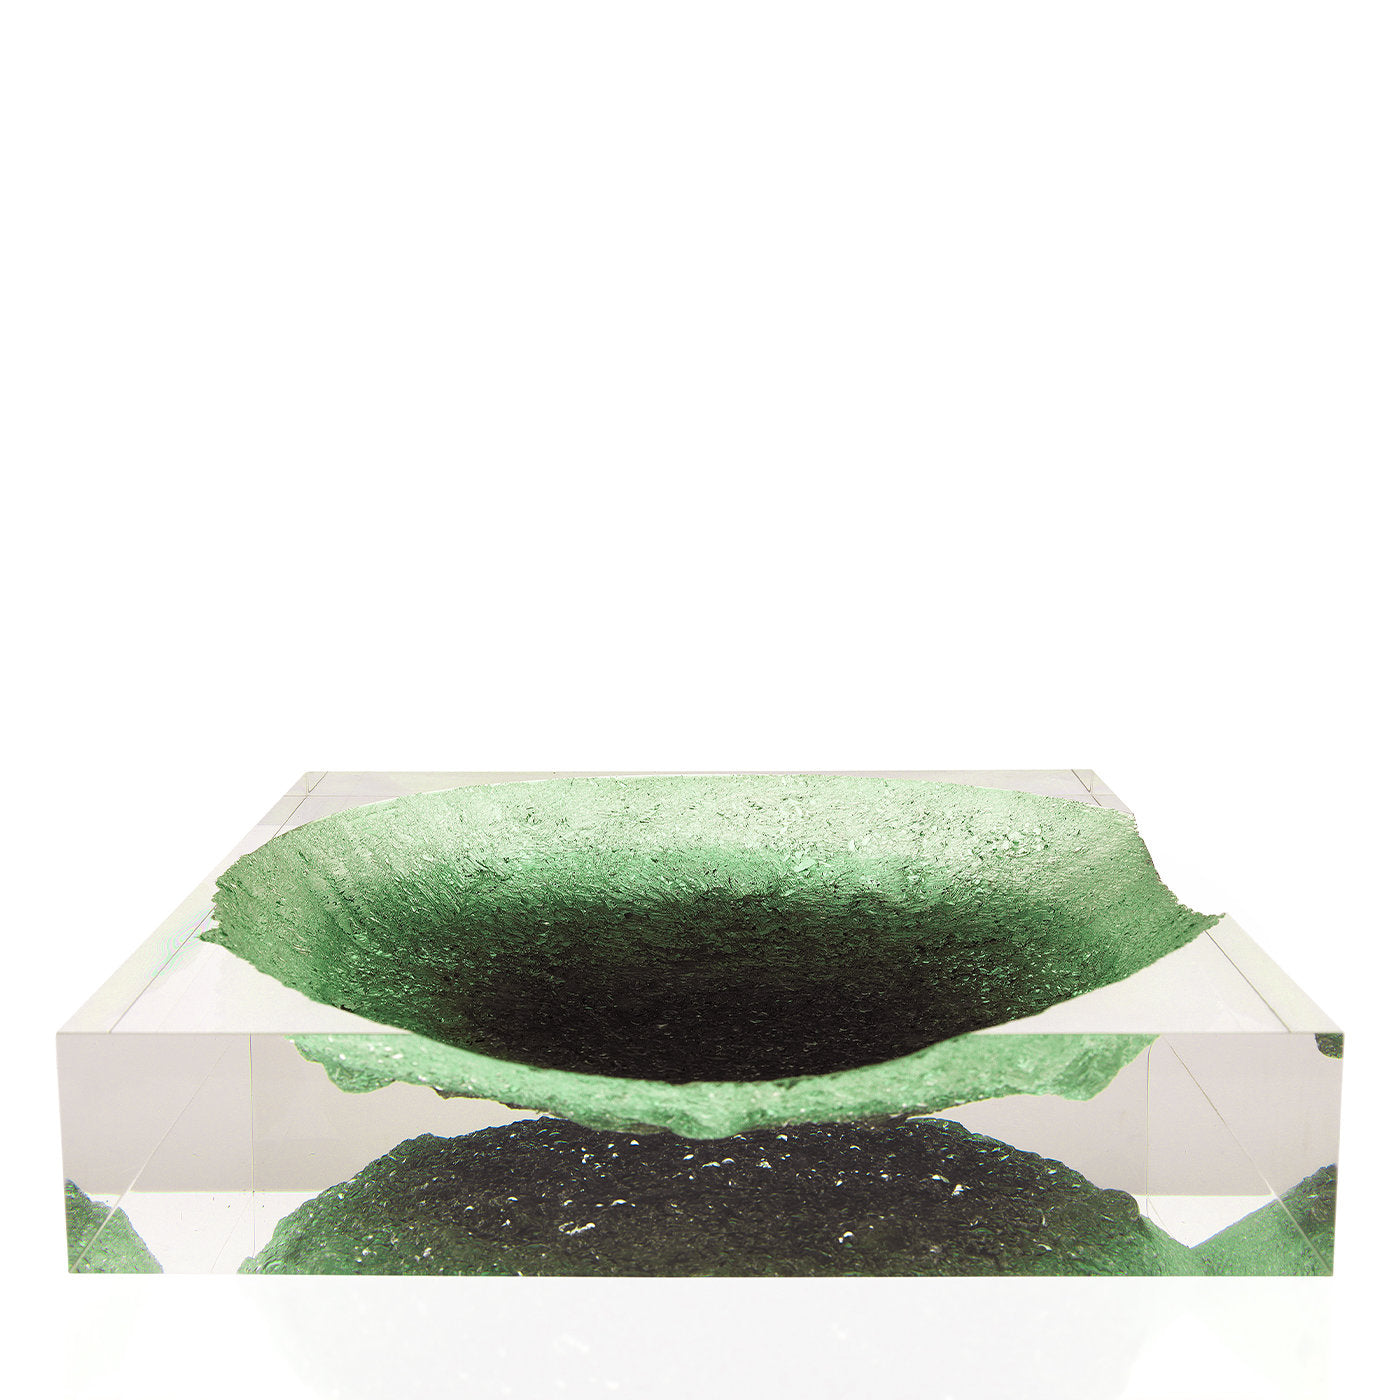 Glacoja Emerald Centerpiece by Analogia Project - Alternative view 1